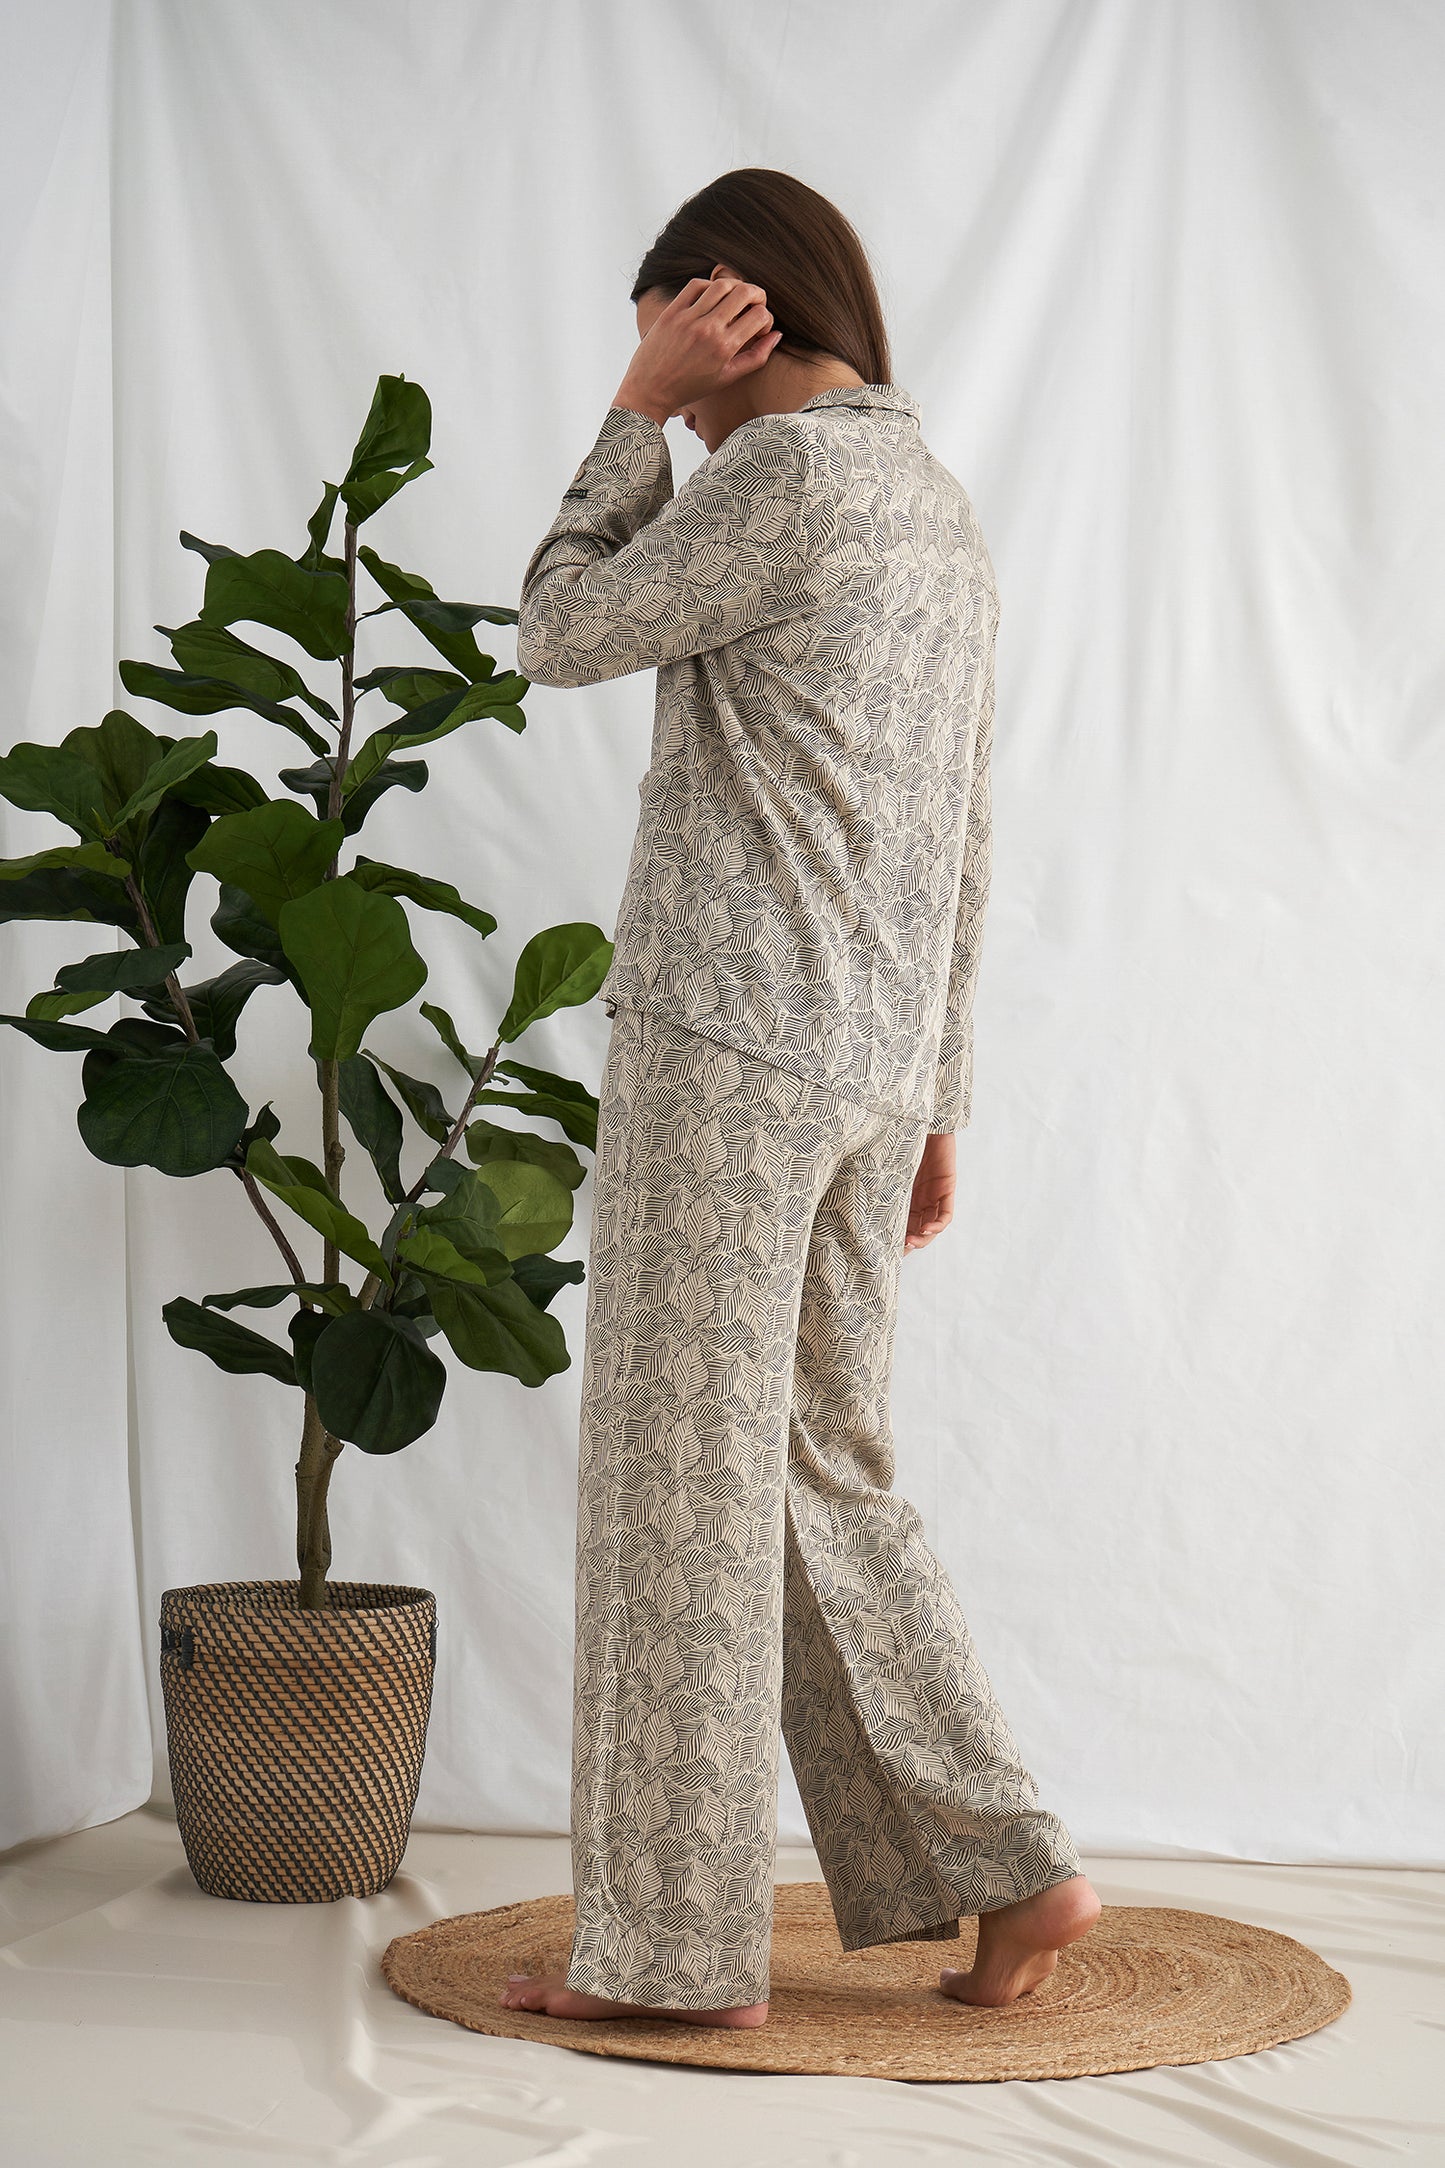 
                  
                    Women's Studio PJ Pyjama Suit in Olive from Pretty You London
                  
                